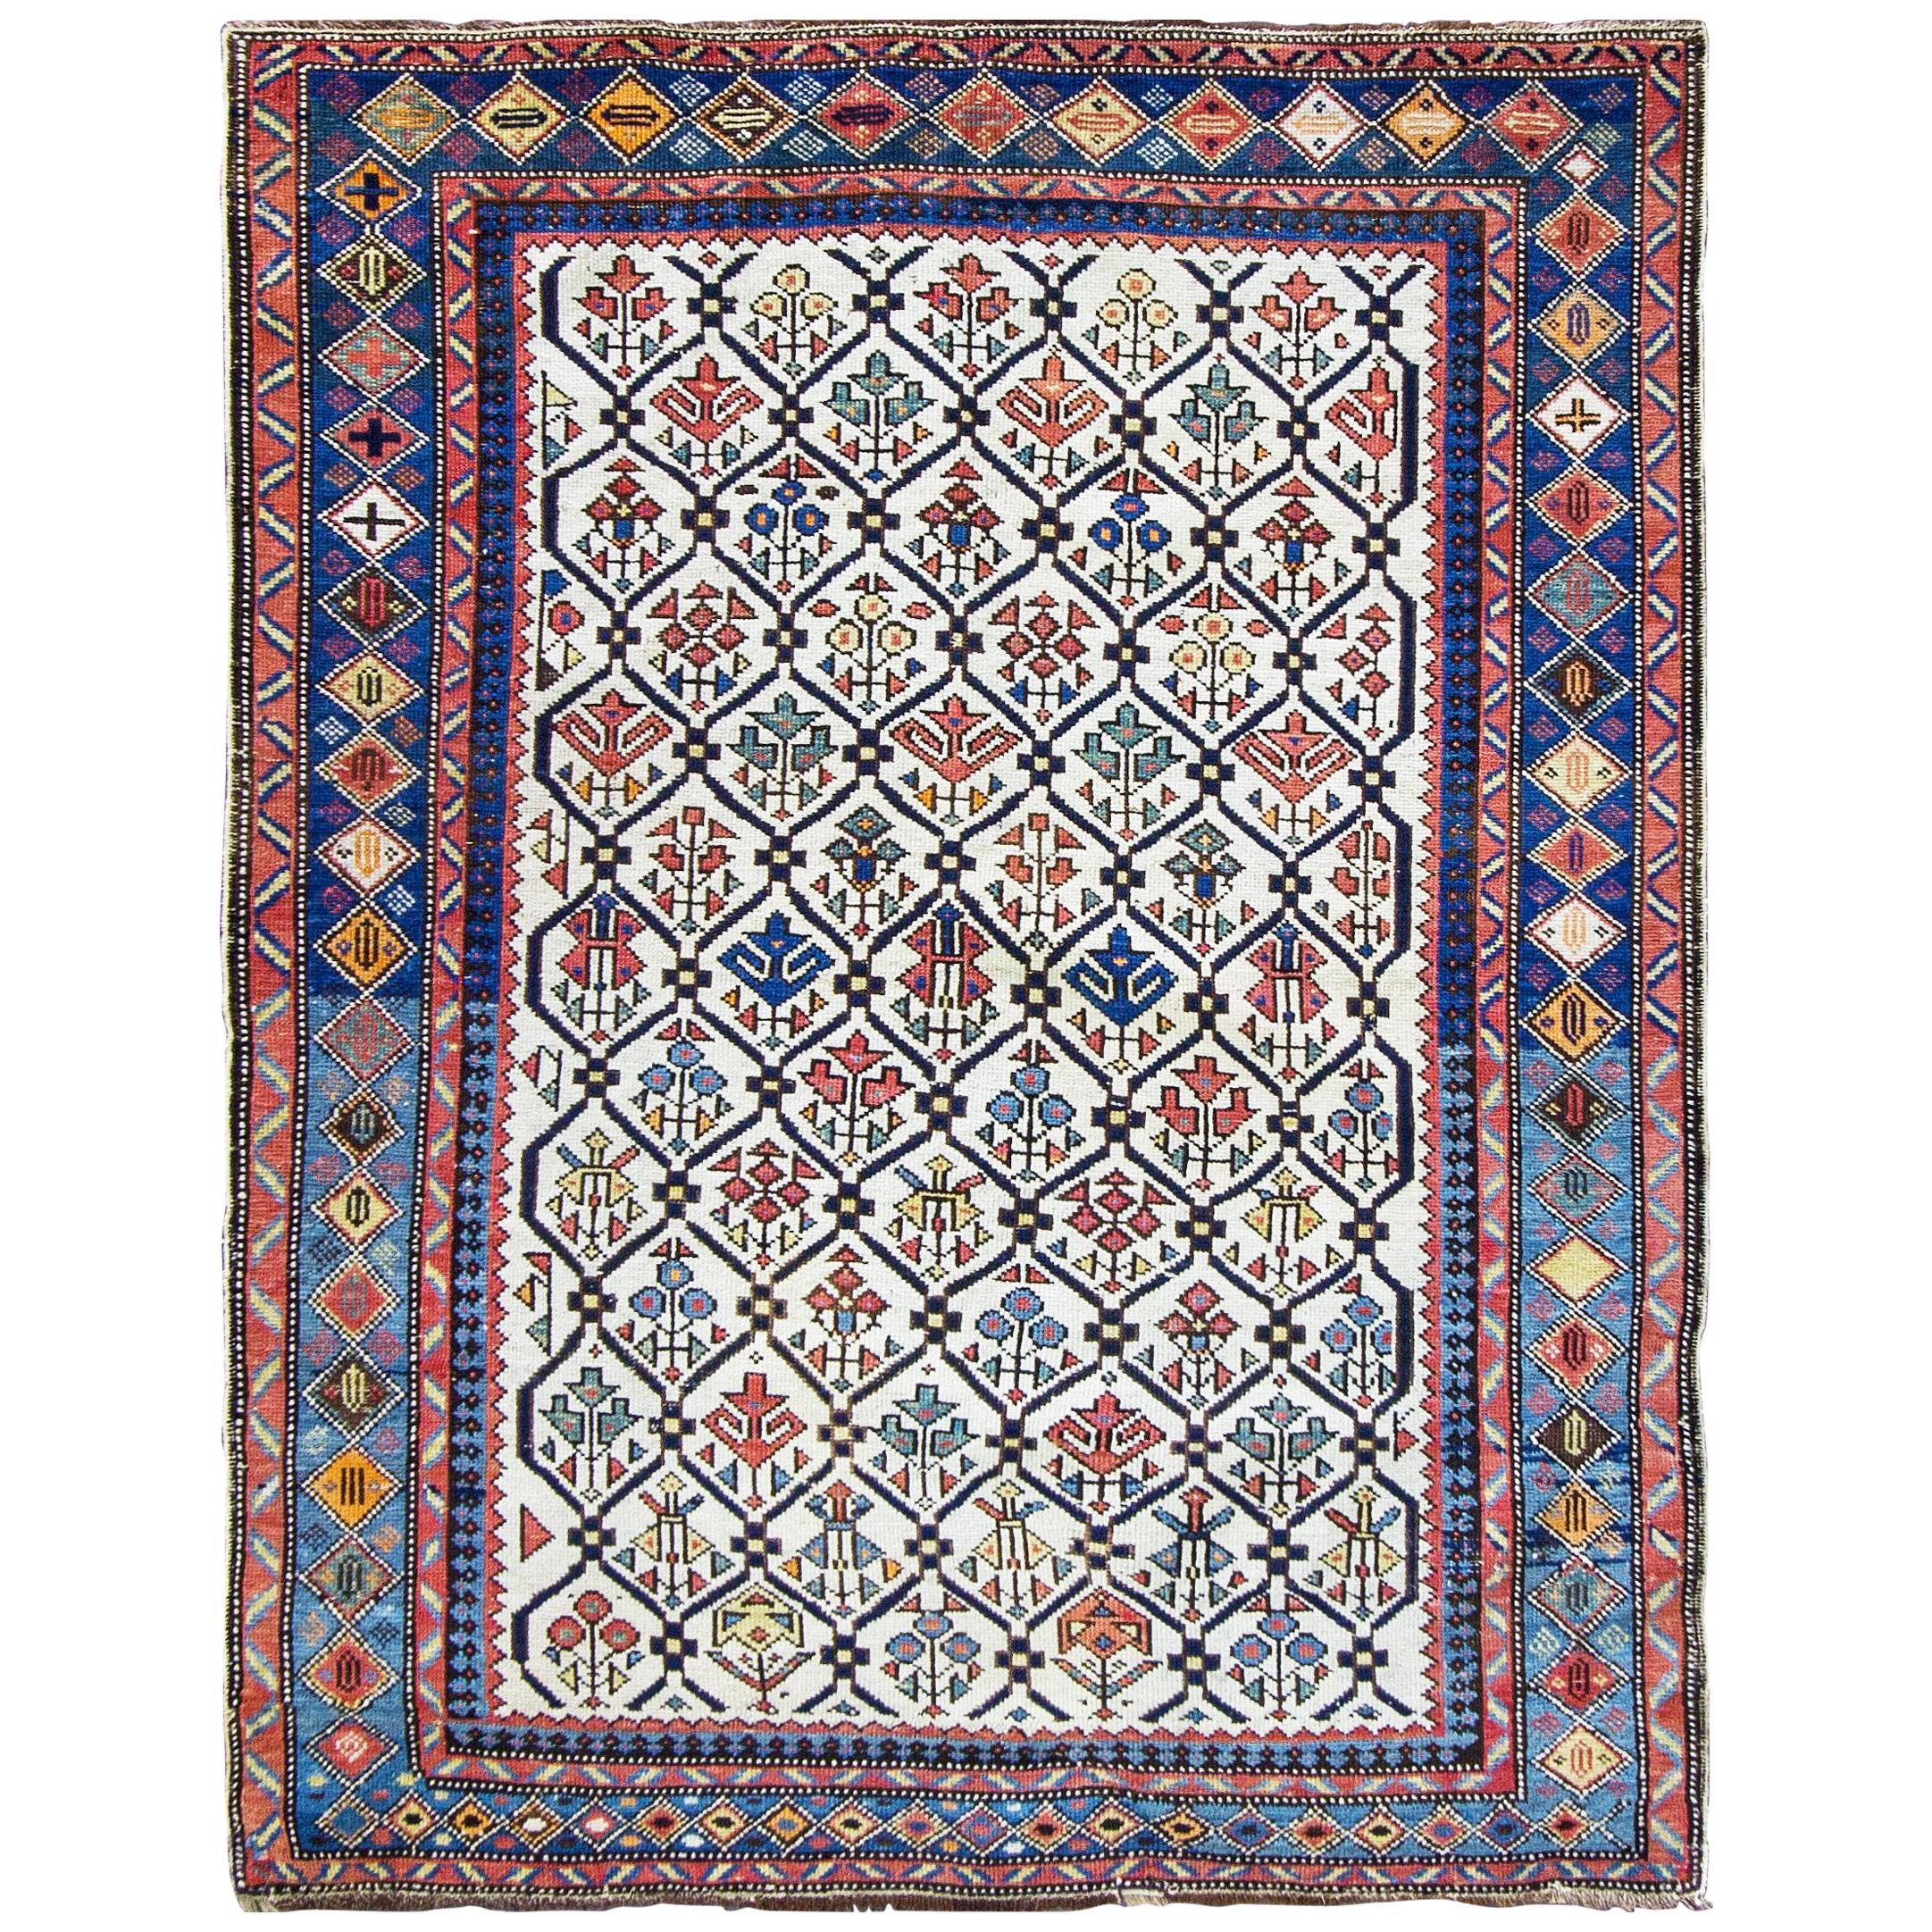 Antique Caucasian Shirvan/ Kazak Rug, 3'6" x 4'7"